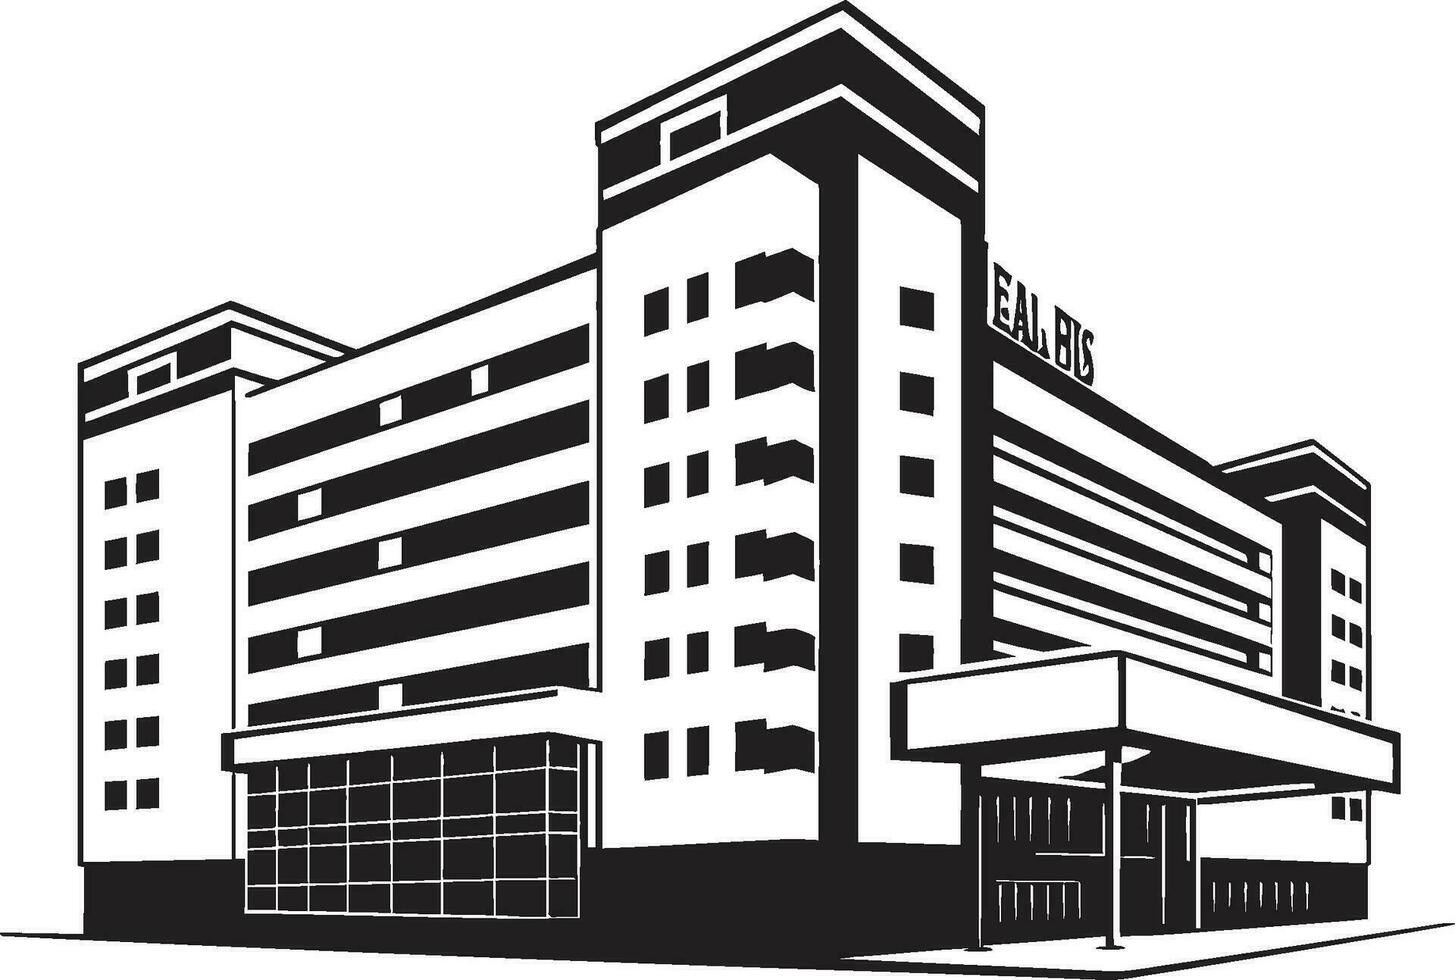 médico nexo hospital edificio icónico bienestar alas clínica logo emblema vector